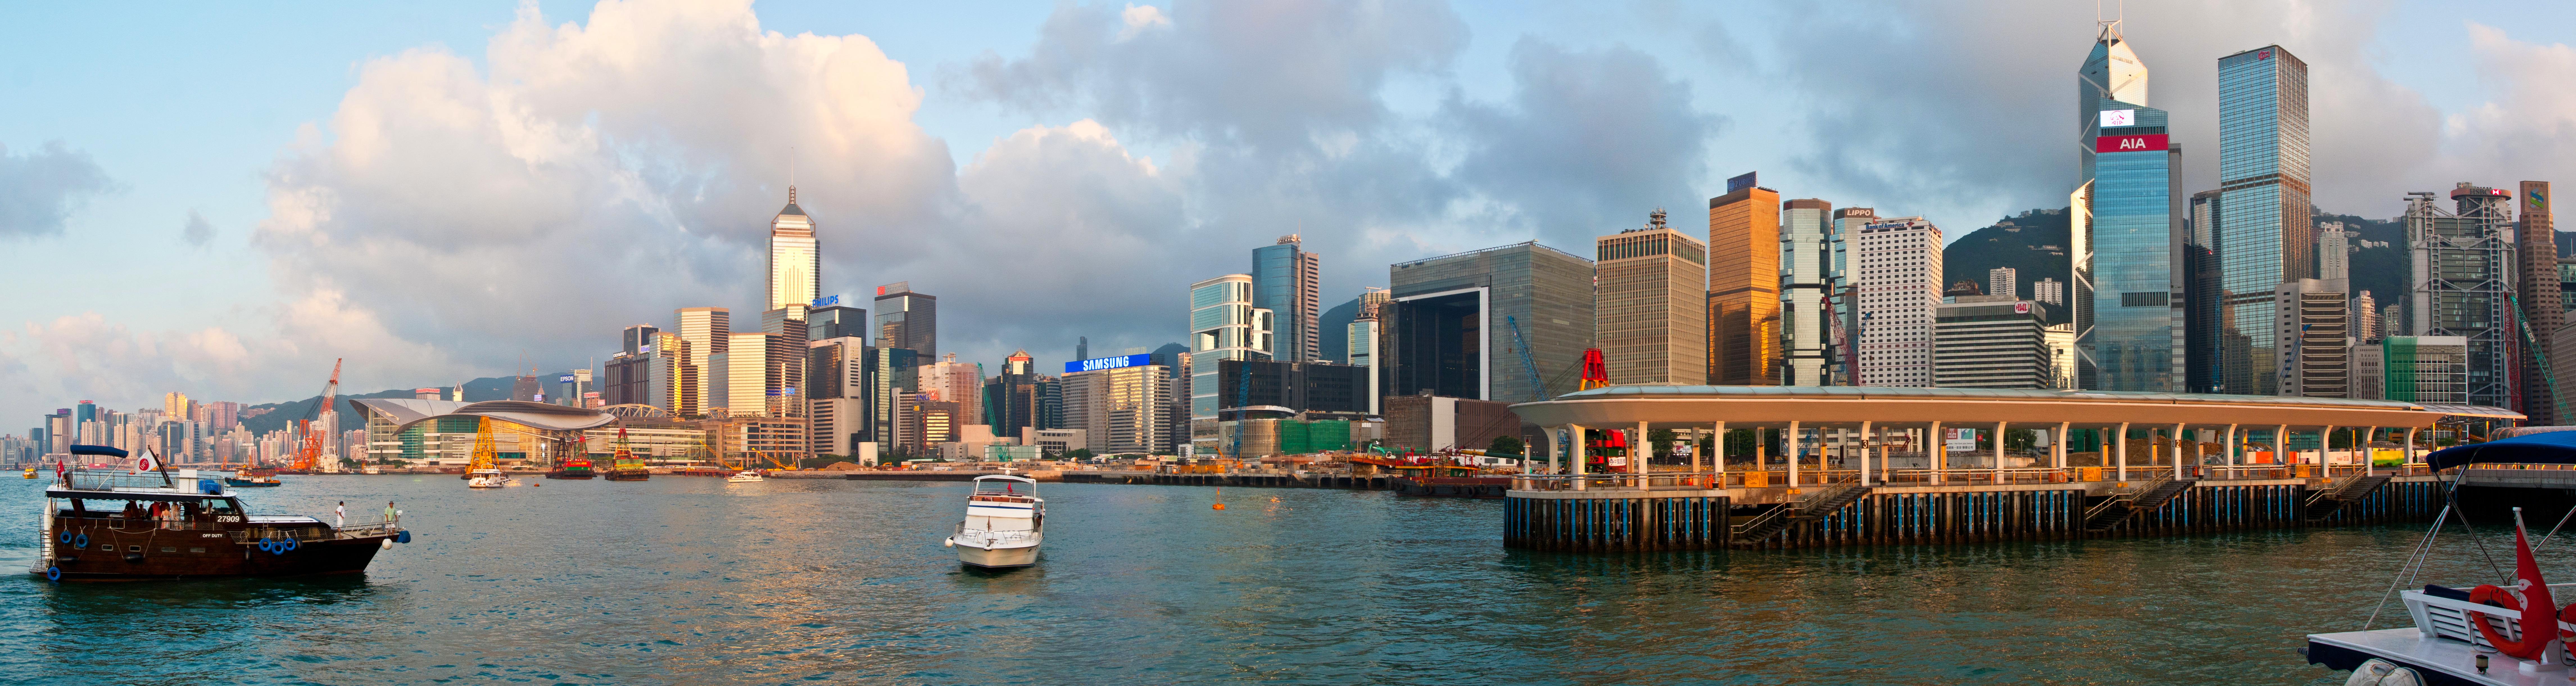 Panorama HK 2011 2